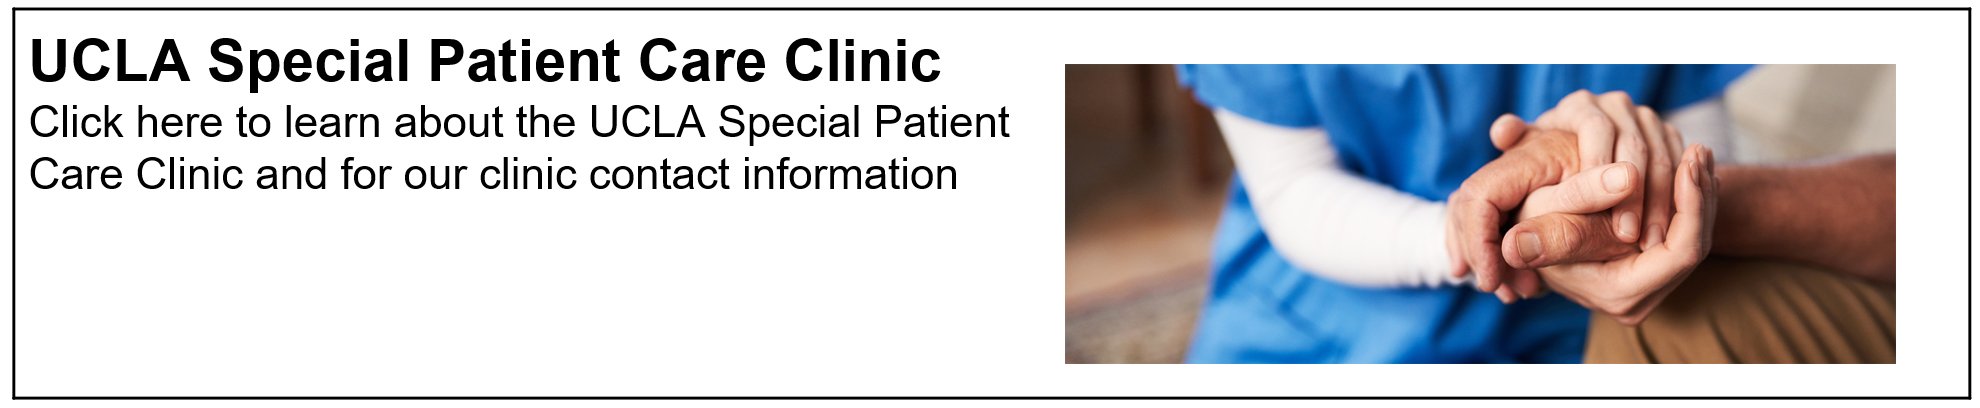 SPC clinic.jpg